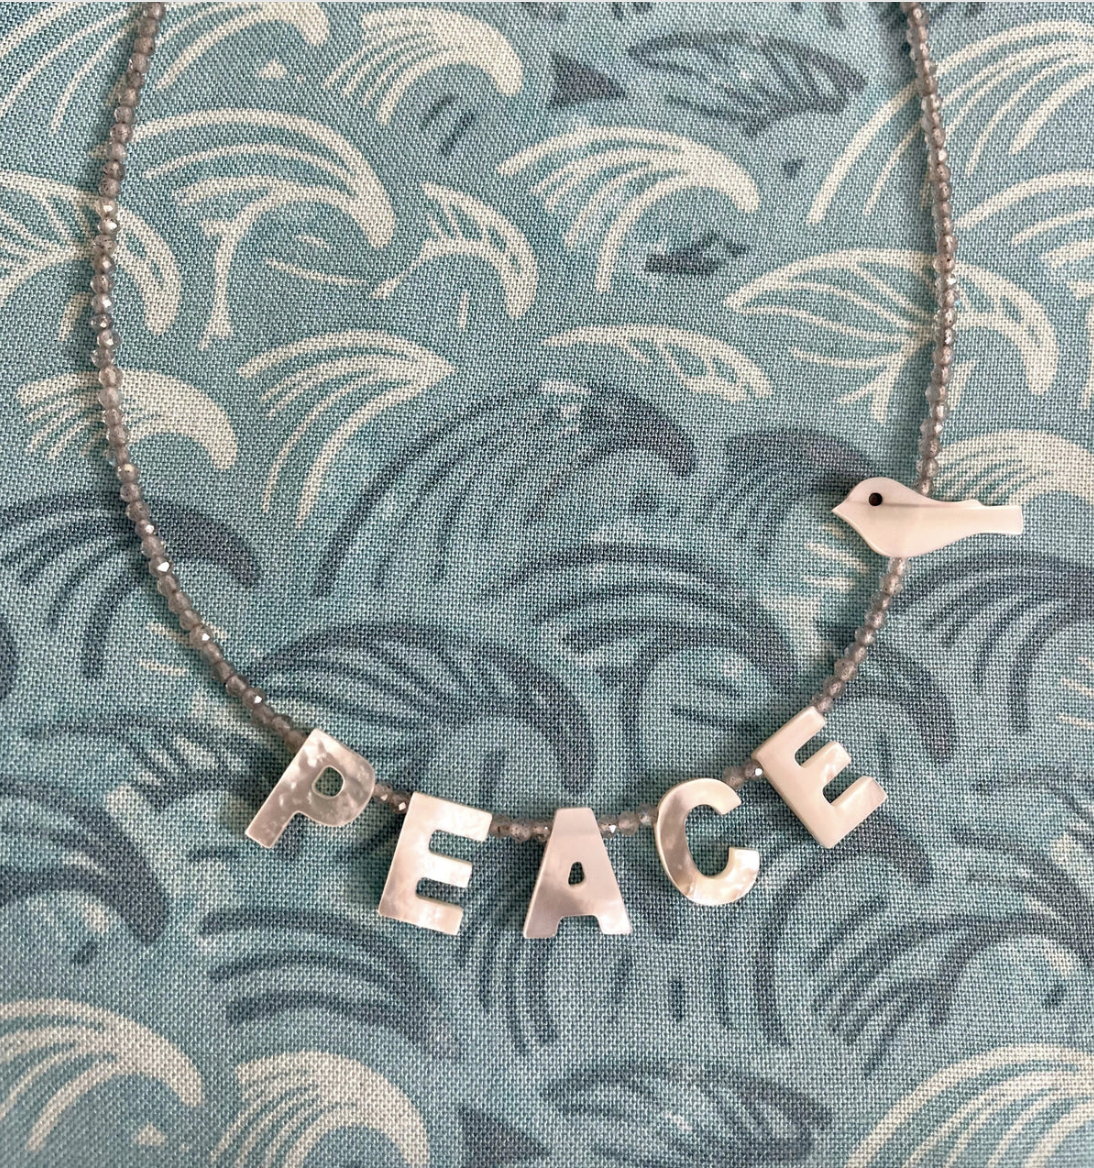 PEACE Necklace in Labradorite